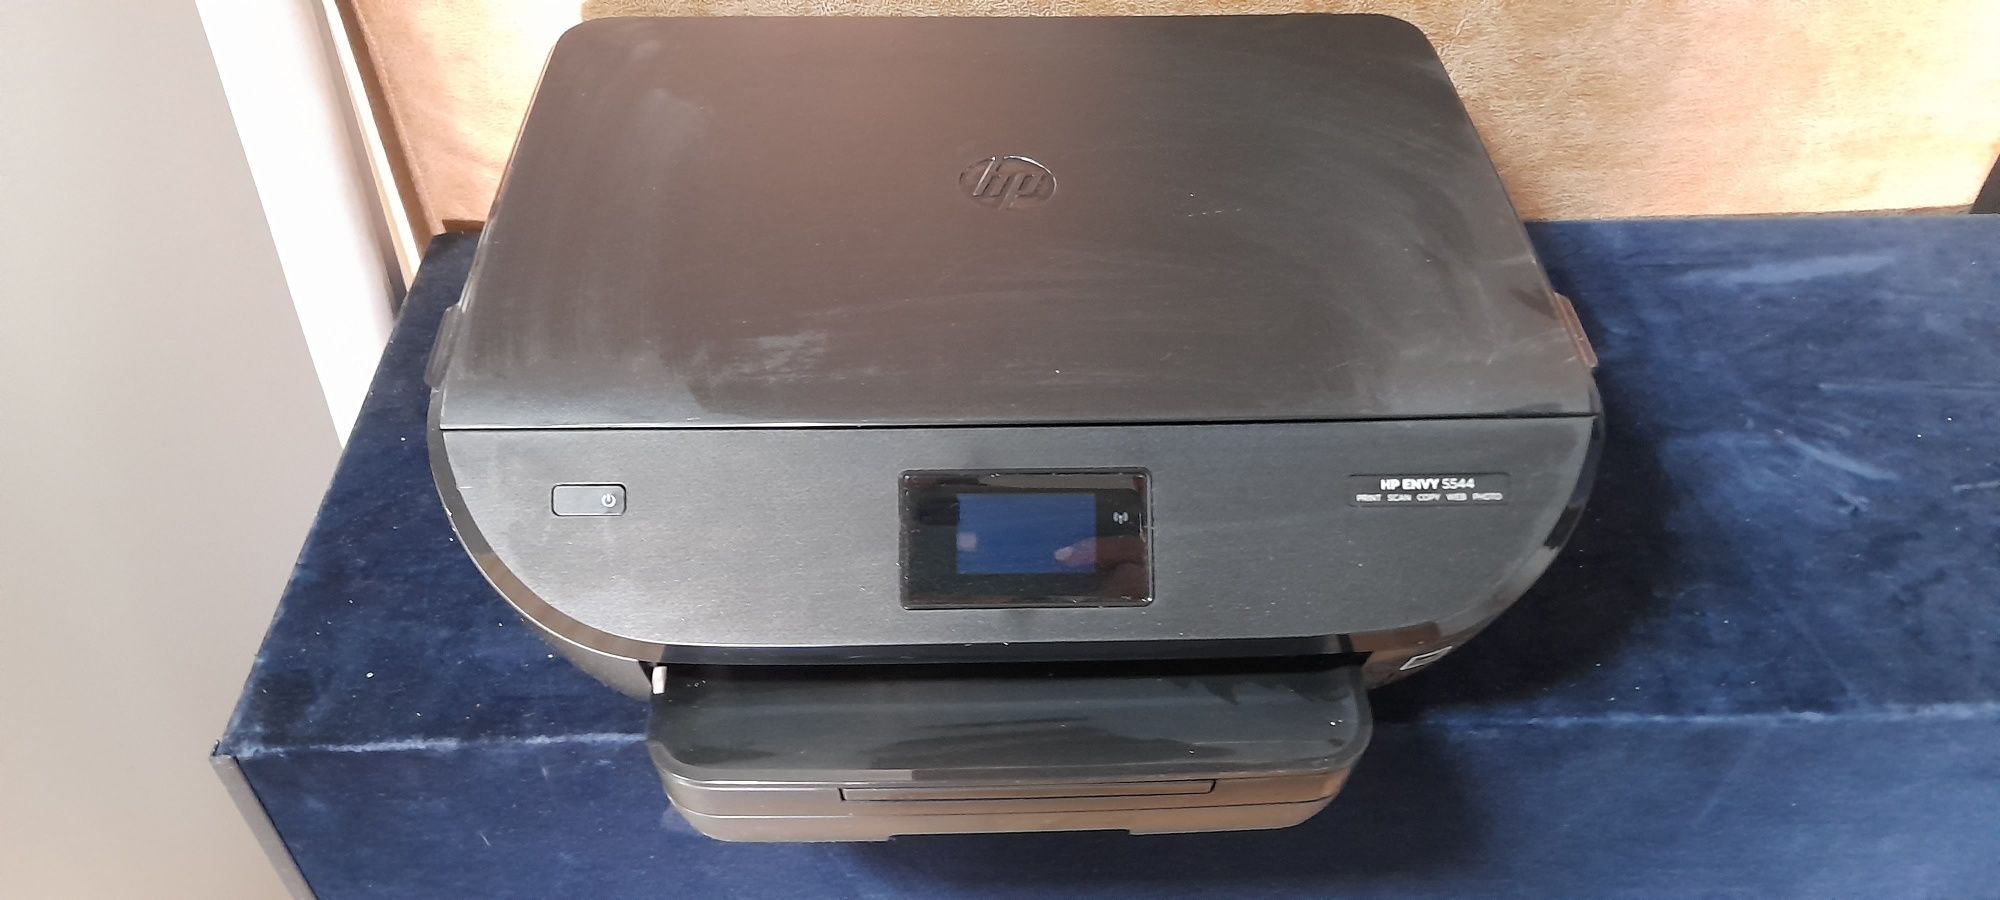 Impressora HP ENVY 5544